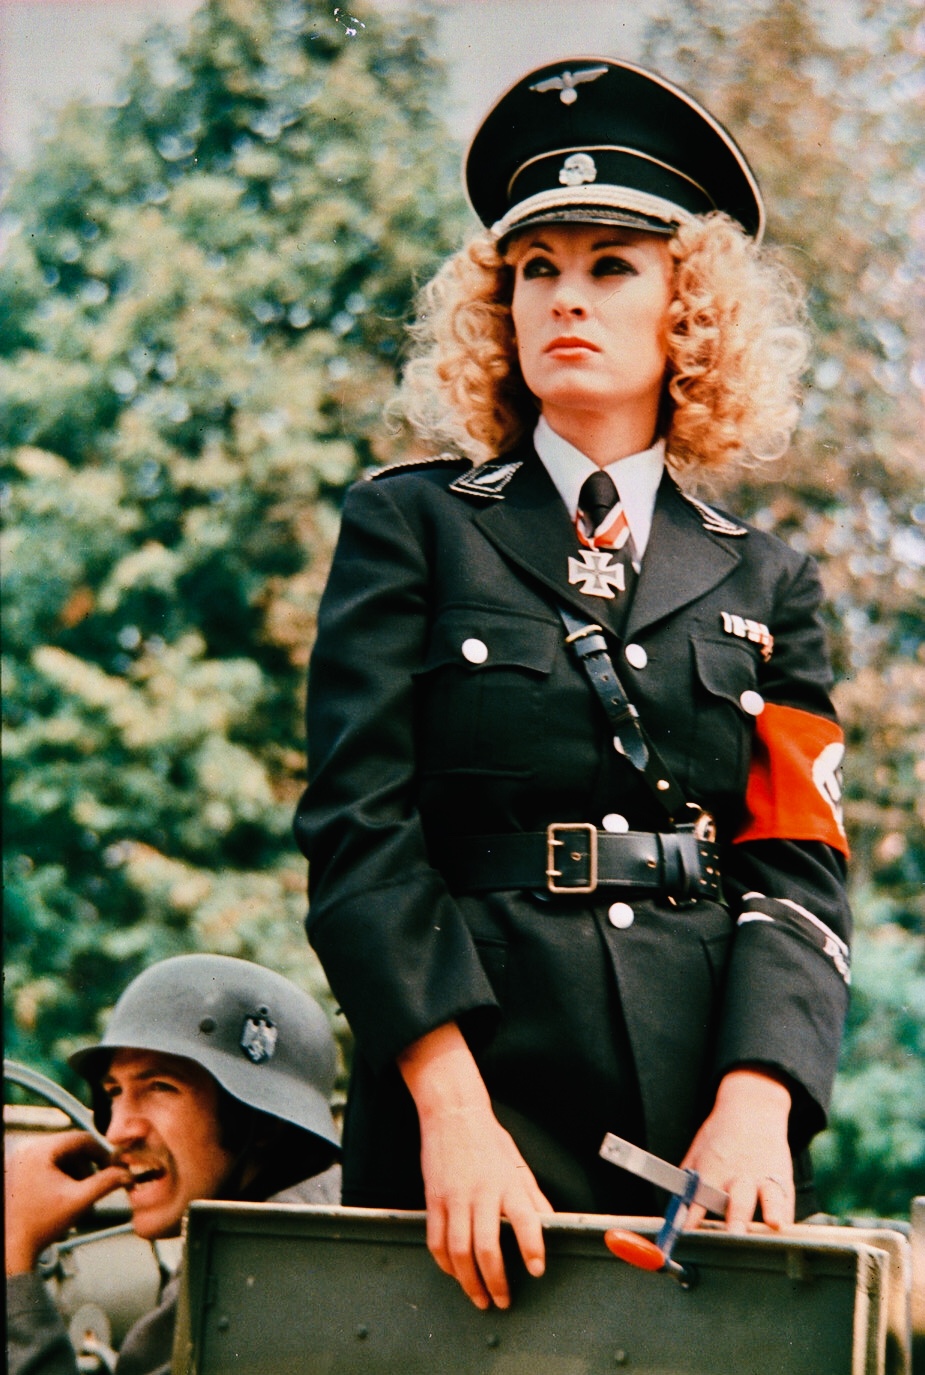 Elsa Fraulein SS 1977